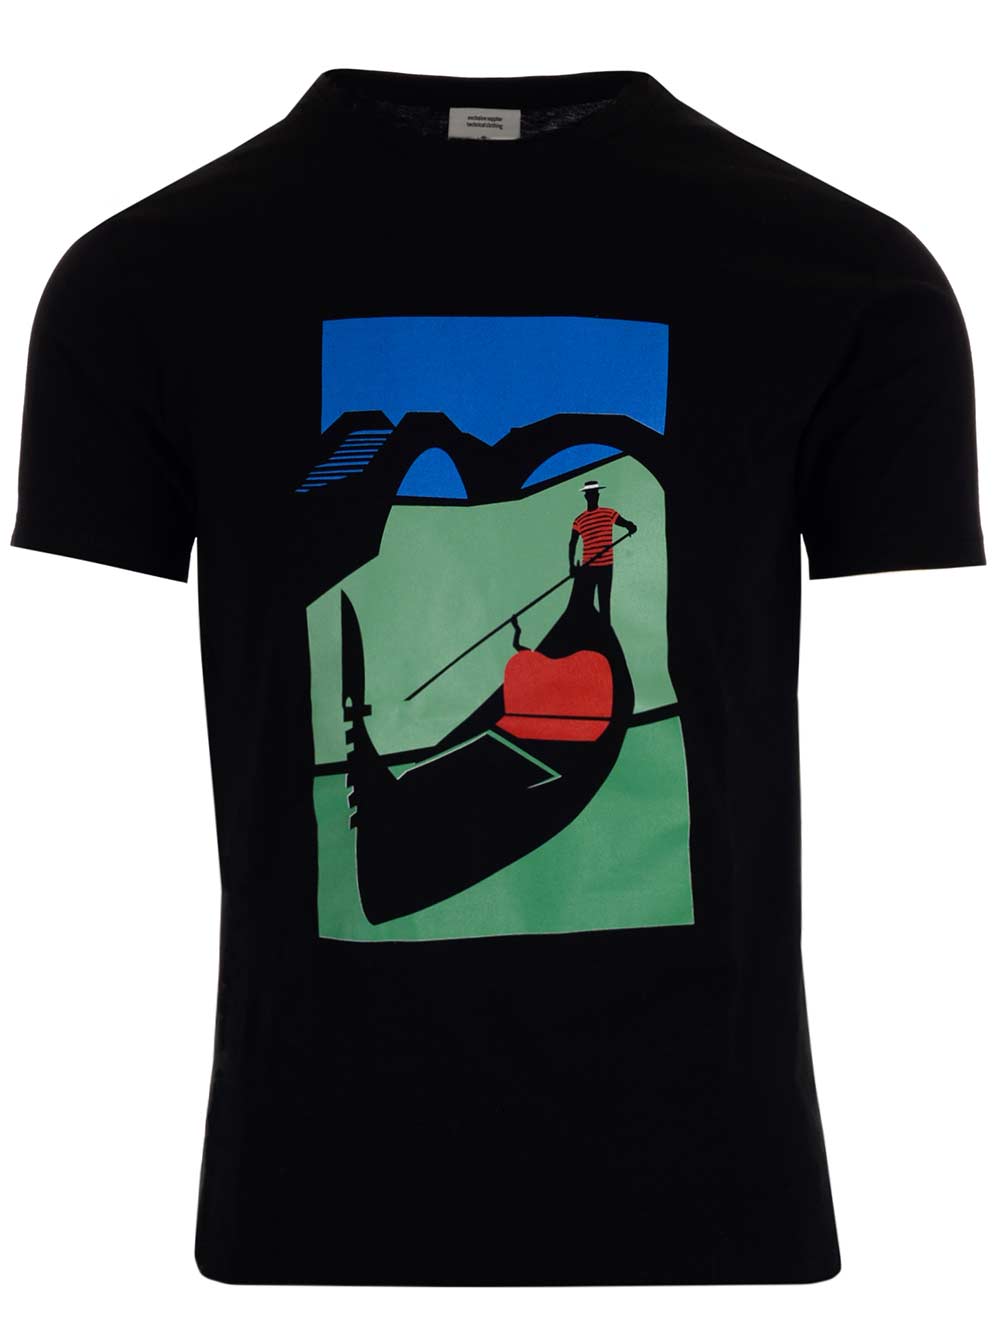 Gondola print T-shirt